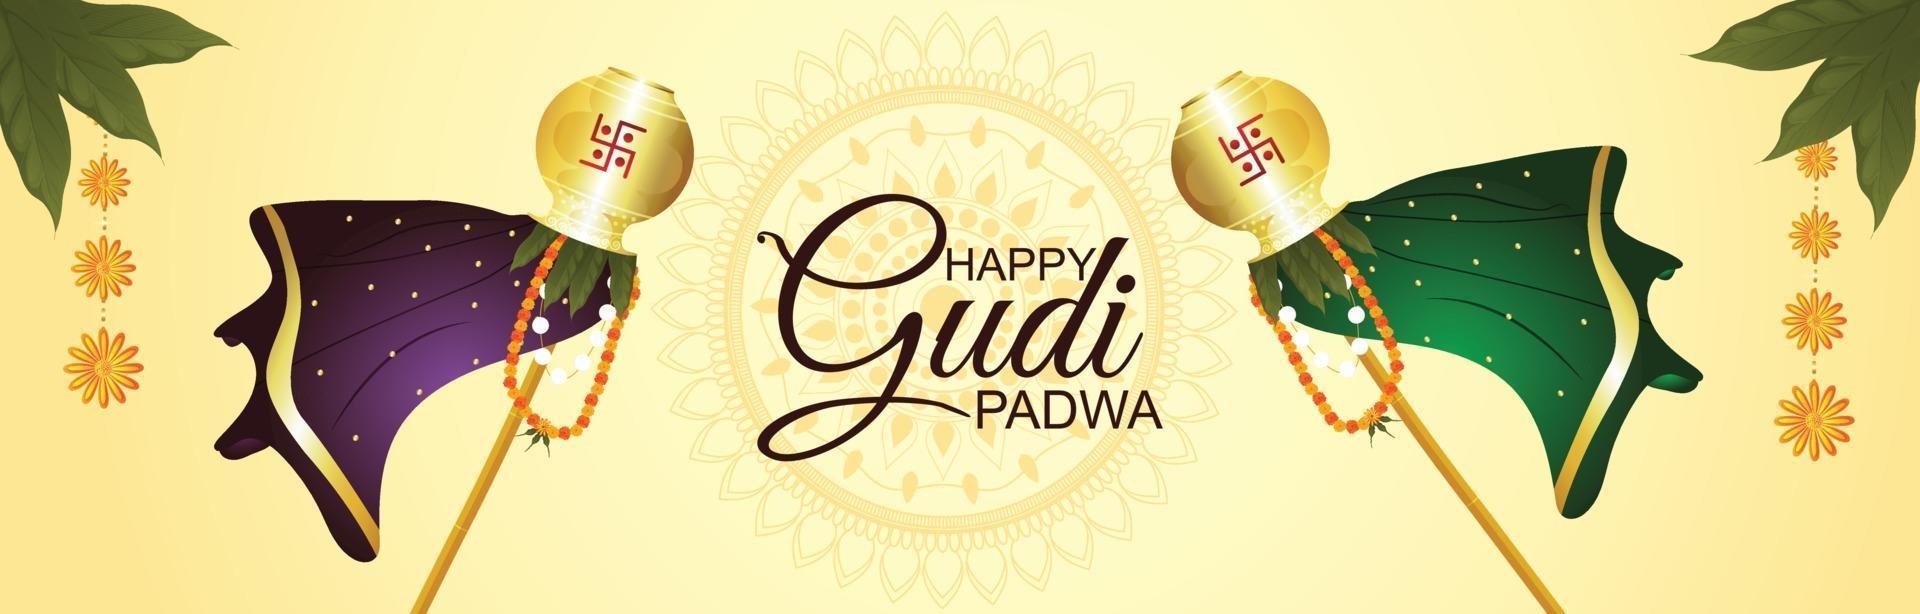 Happy ugadi indian festival greeting card vector